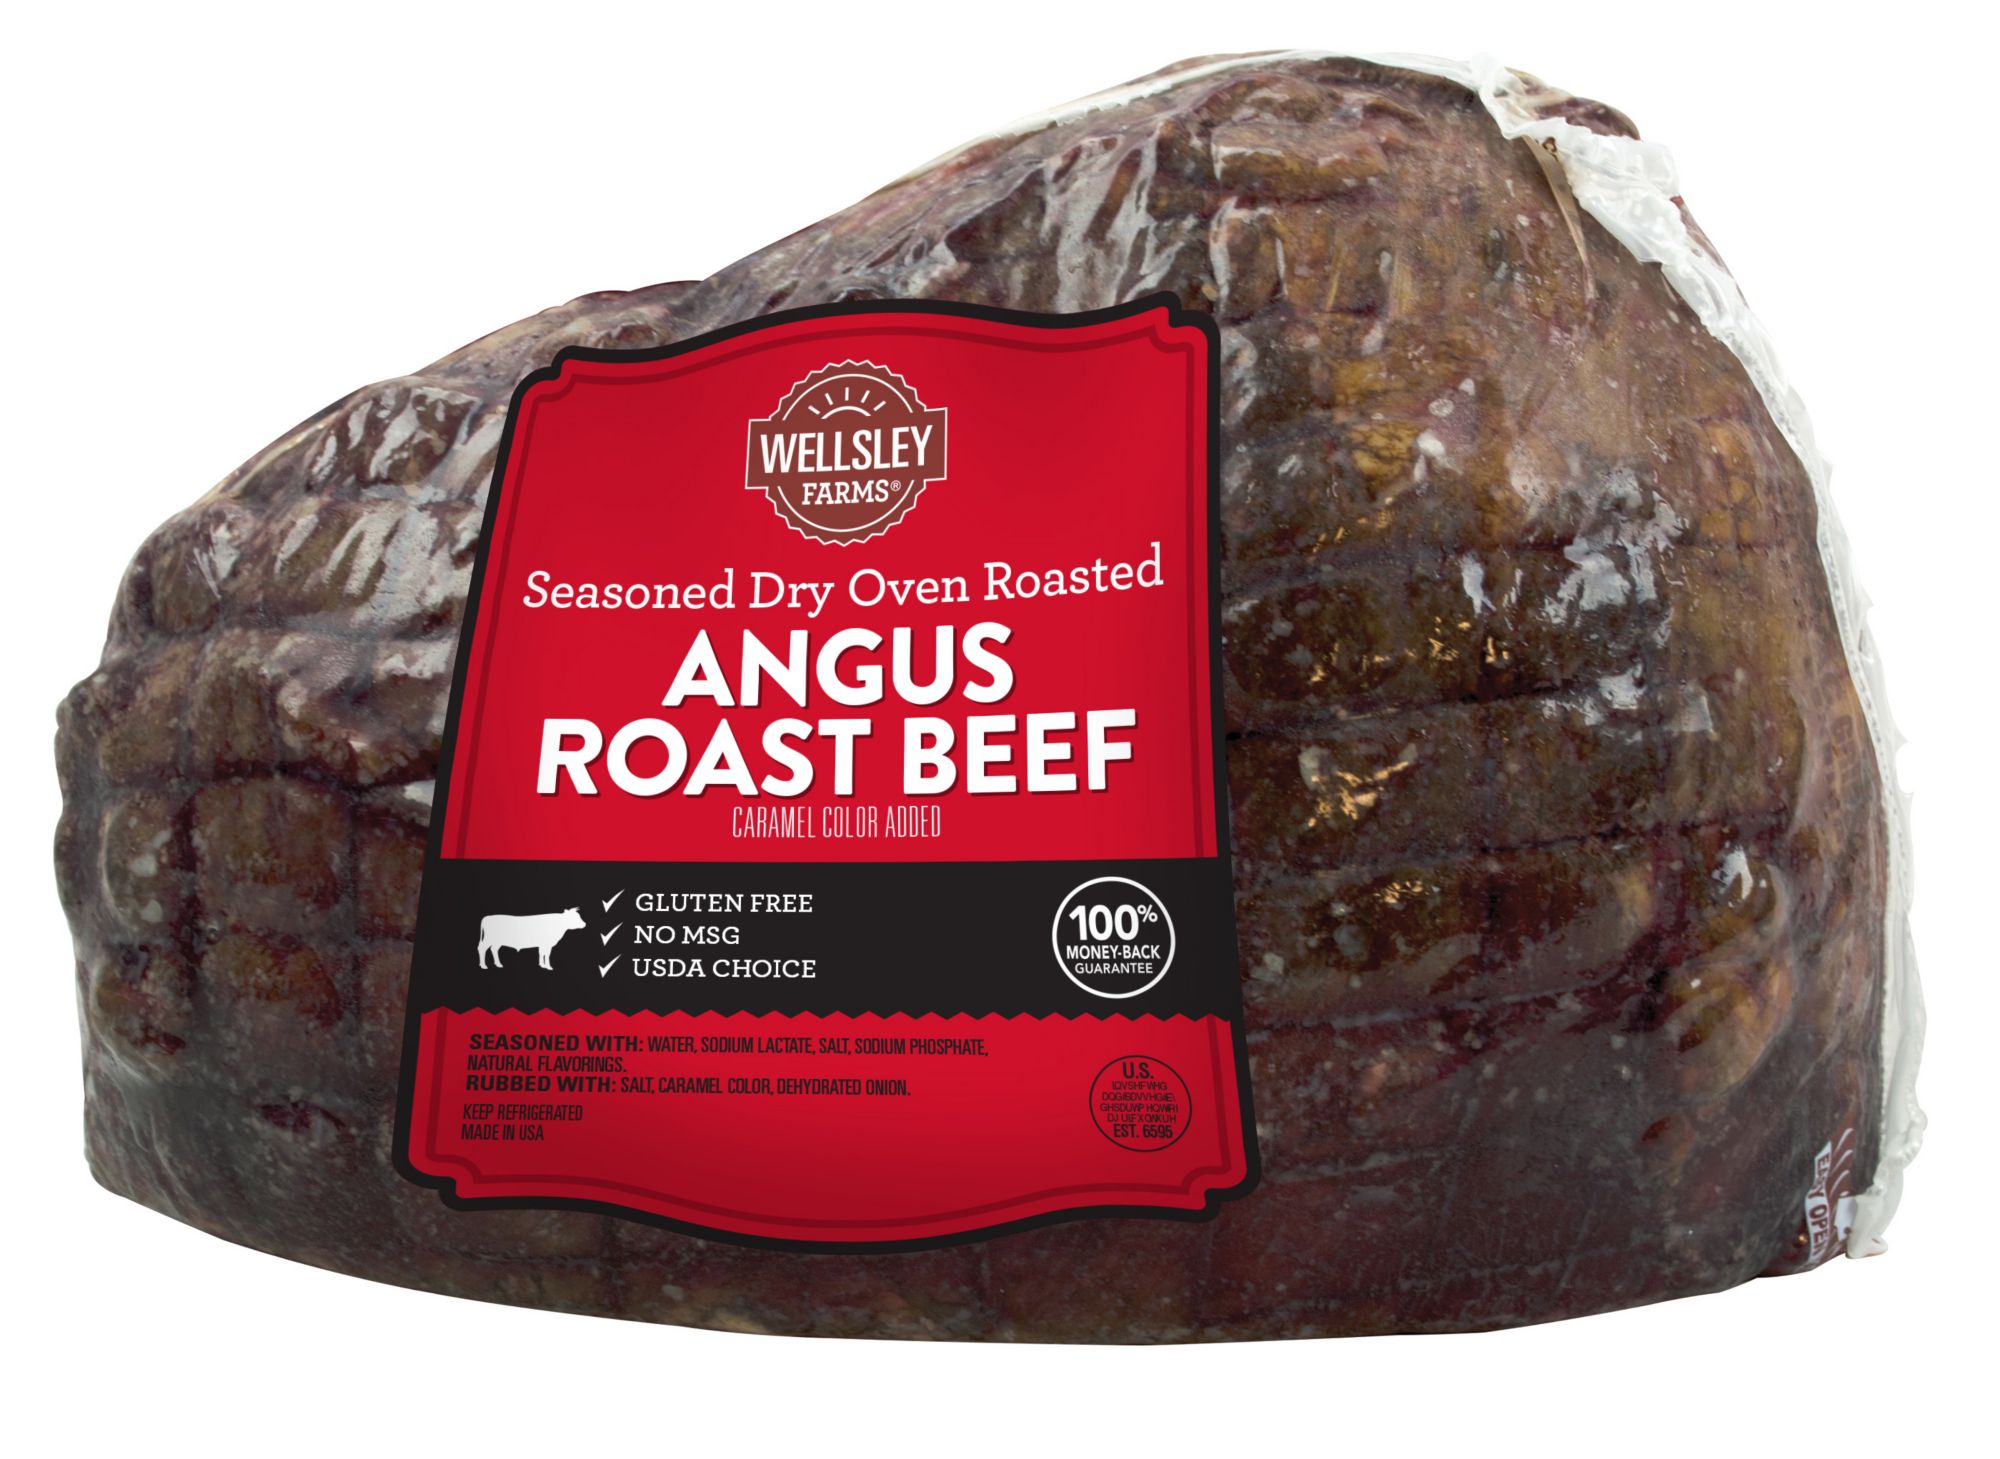 Wellsley Farms Angus Roast Beef, 0.75-1.5 lb Standard Cut